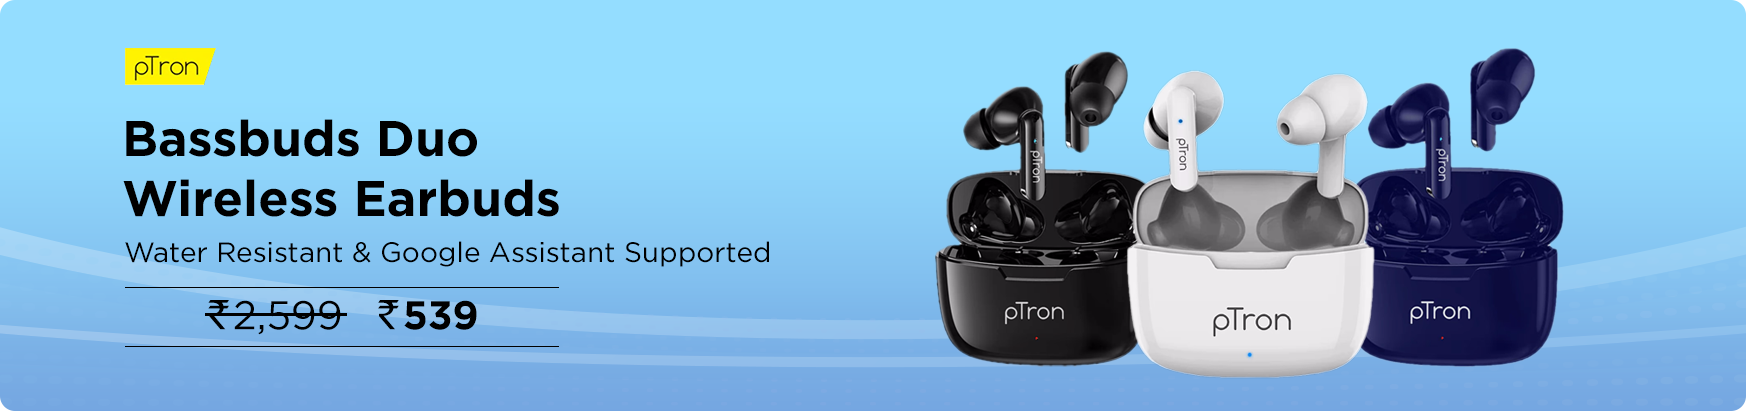 pTron Bassbuds Duo Wireless Earbuds